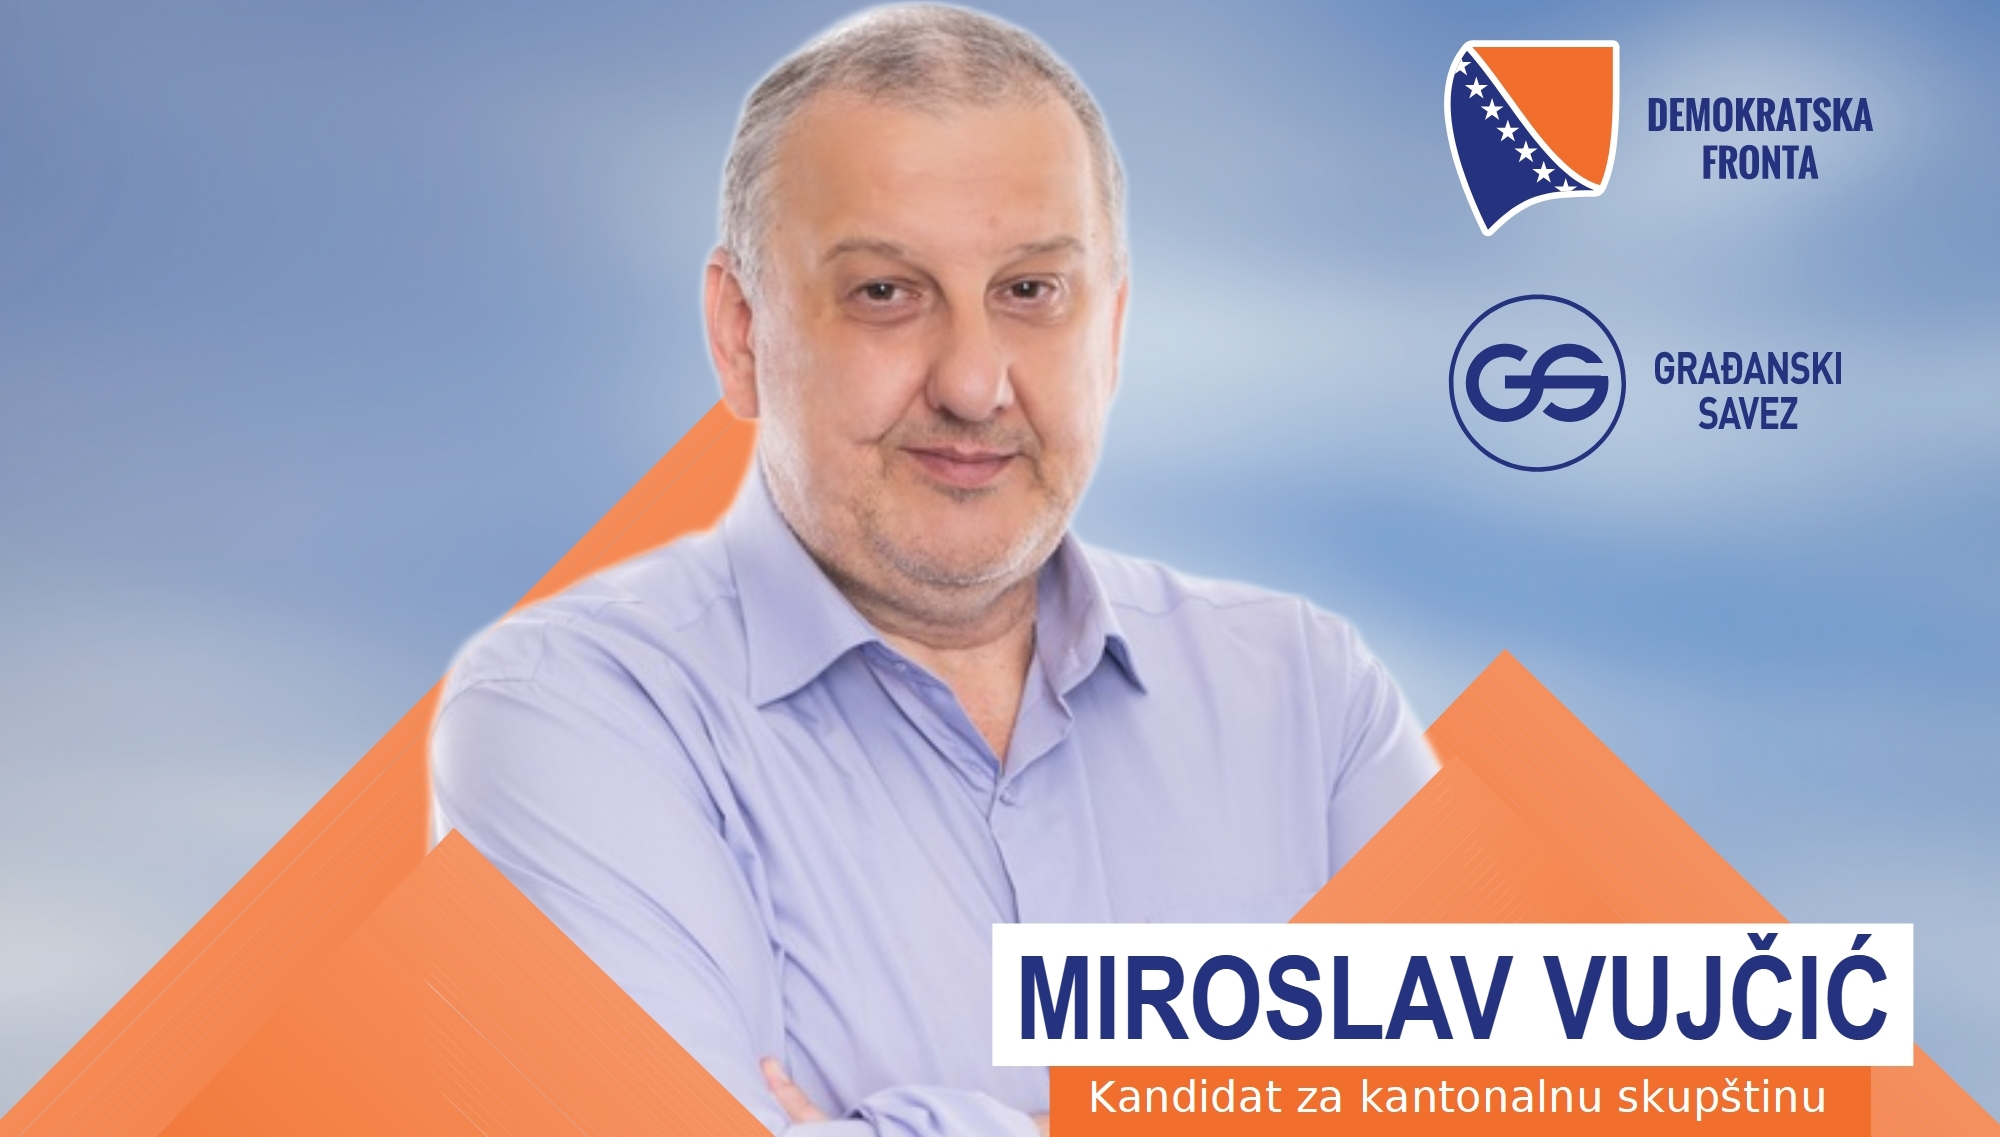 Predstavljamo naše kandidate: Miroslav Vujčić